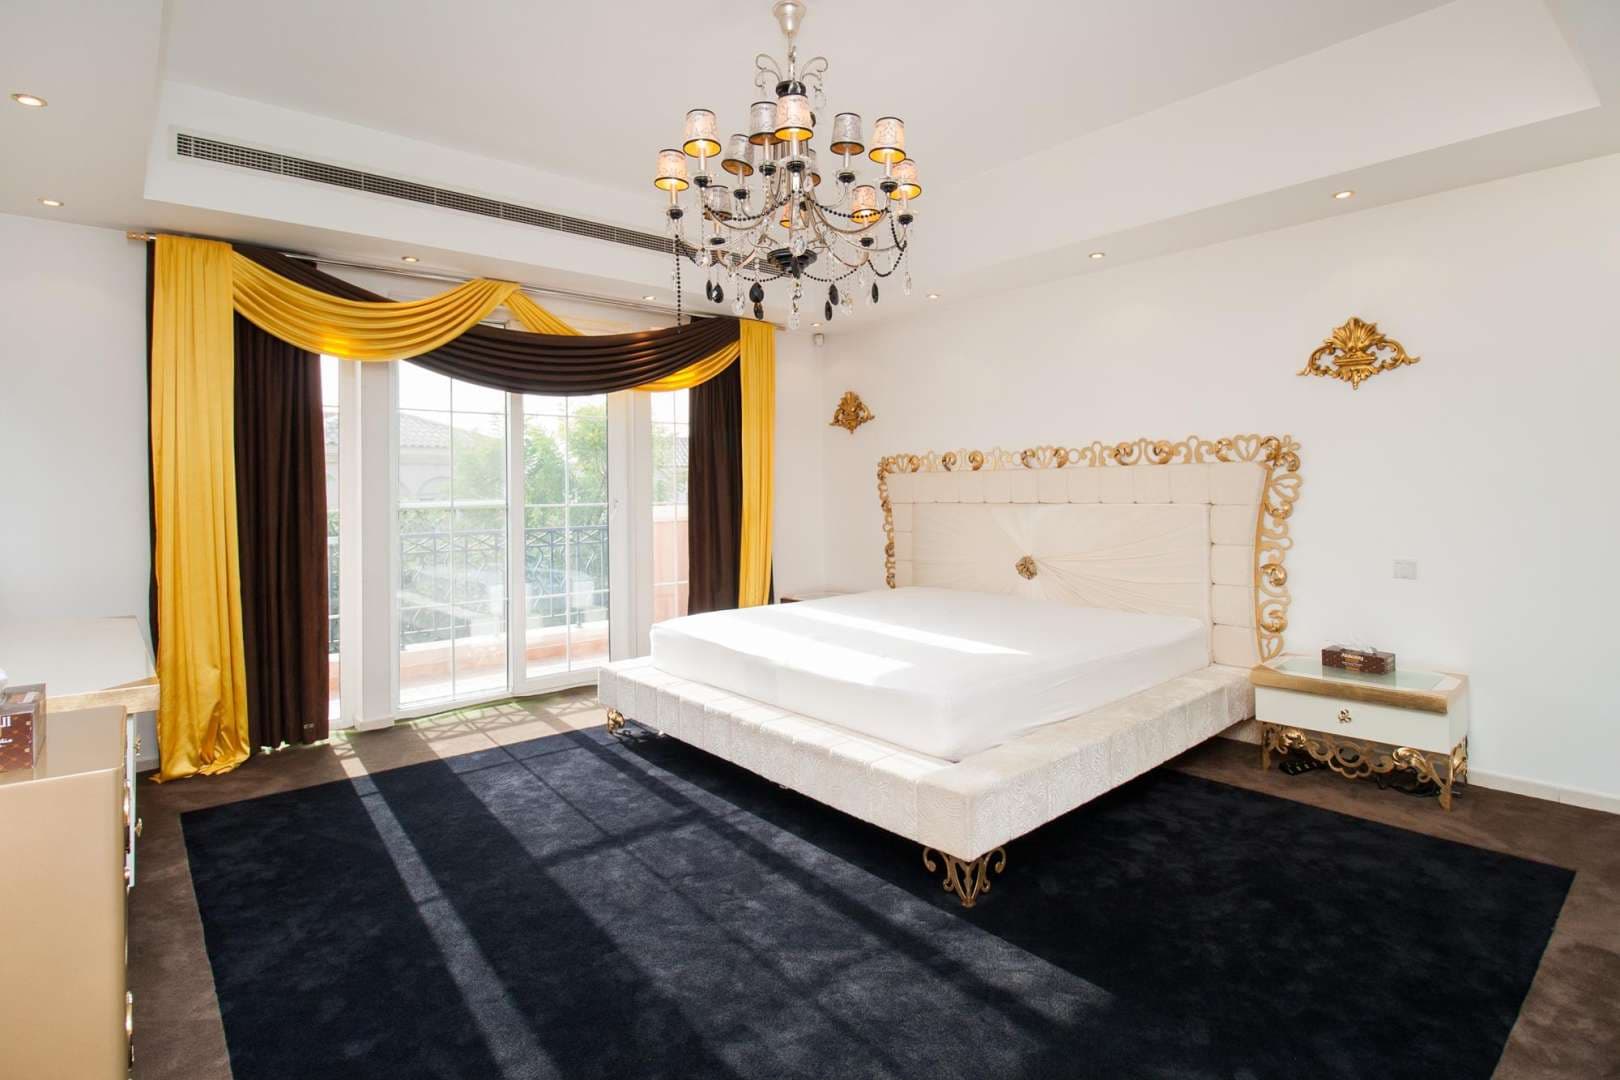 5 Bedroom Villa For Sale Mirador Lp06019 2450e4b69a856400.jpg